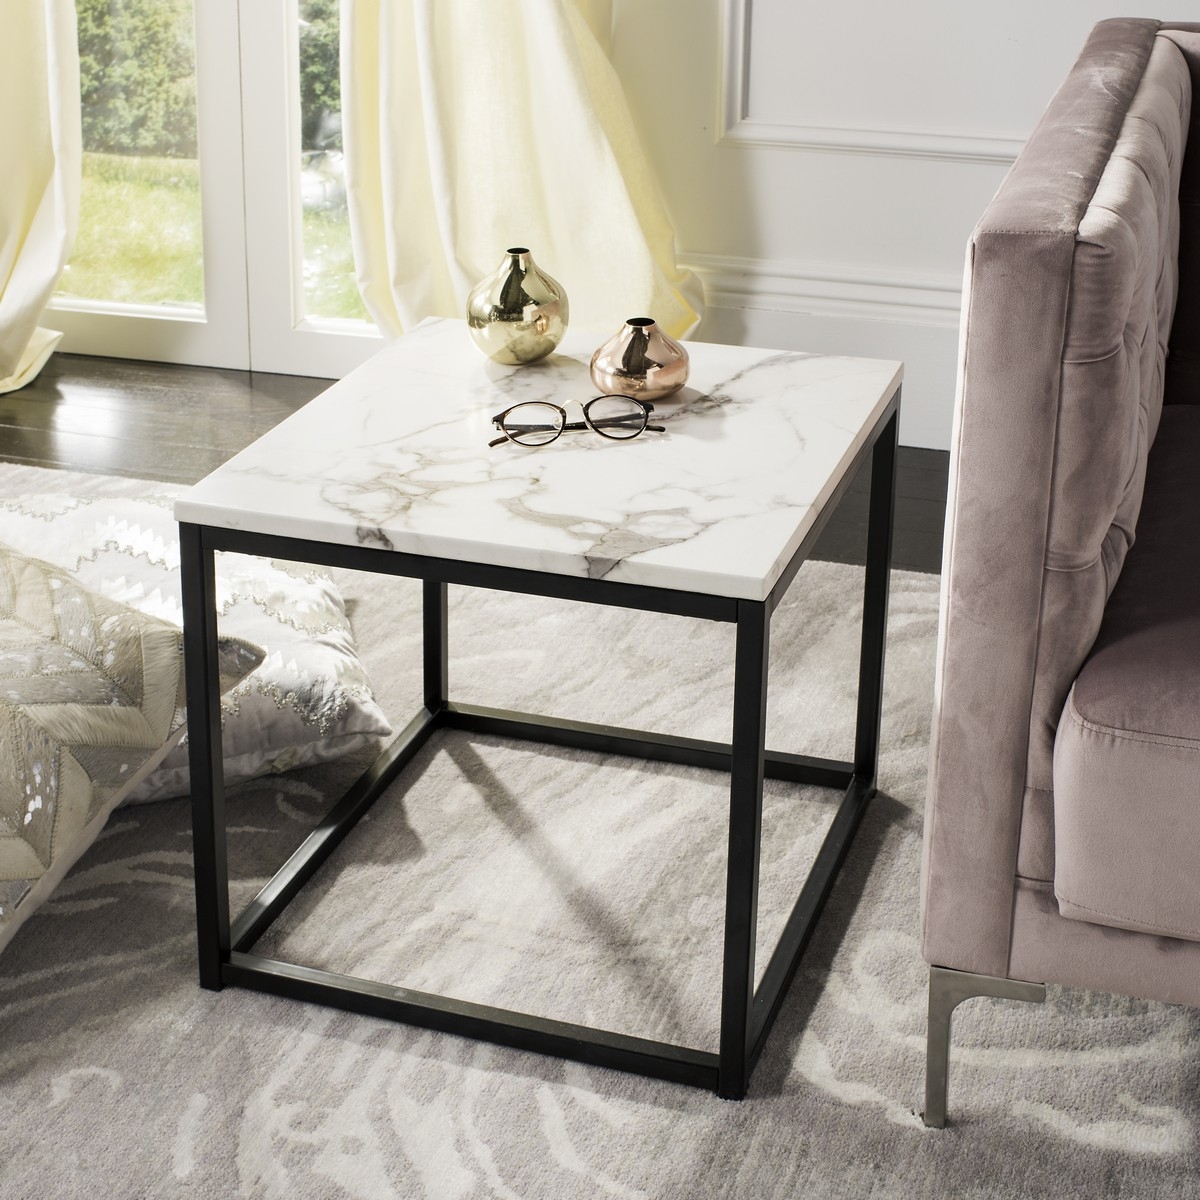 Baize End Table - White/Grey - Arlo Home - Image 2